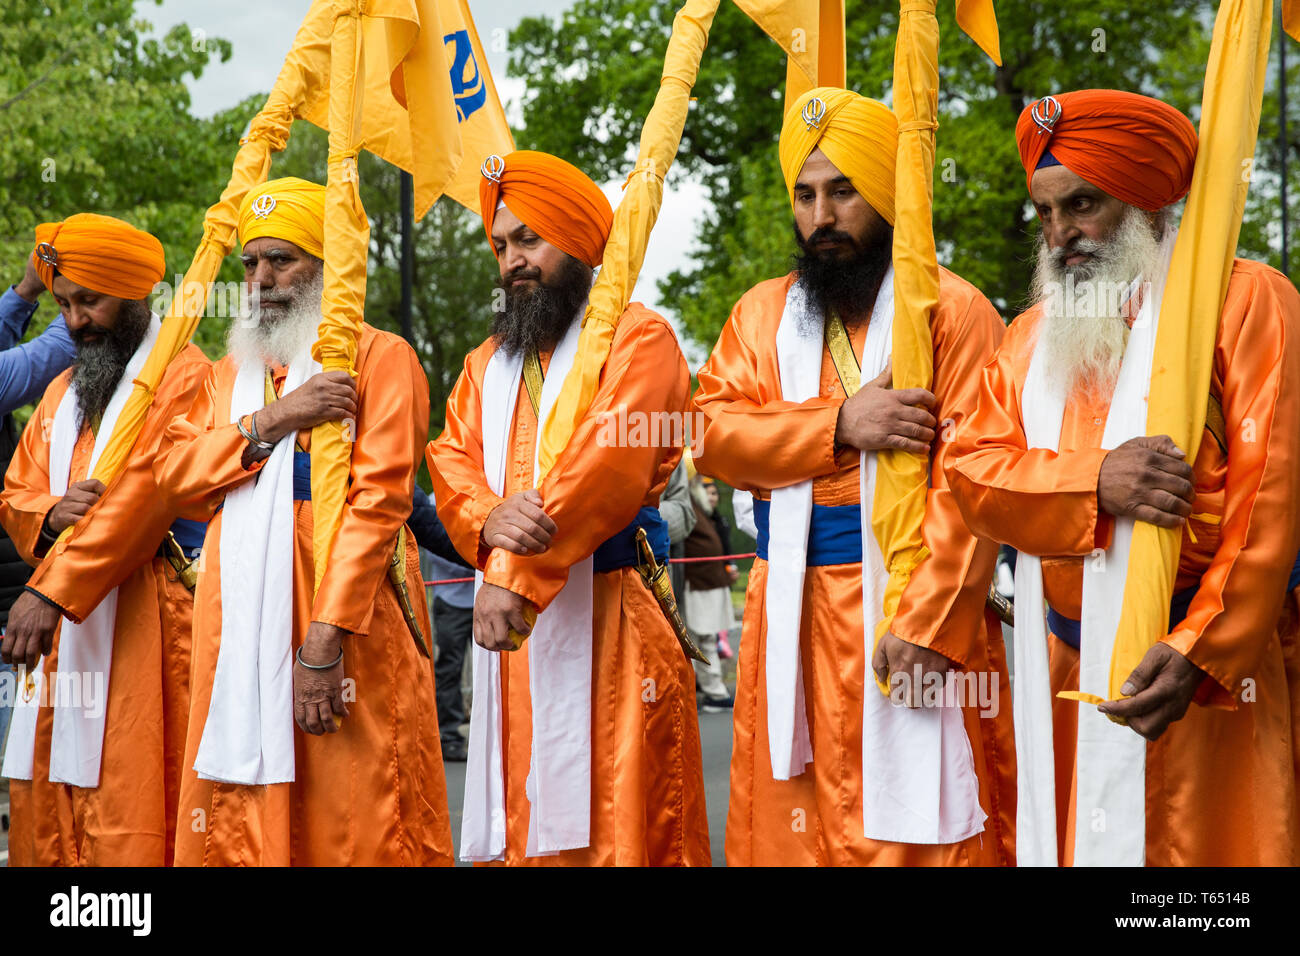 Slough, UK. 28th April 2019. The bearers of the Nishan Sahib take part in the Vaisakhi Nagar Kirtan procession from the Gurdwara Sri Guru Singh Sabha  Stock Photo